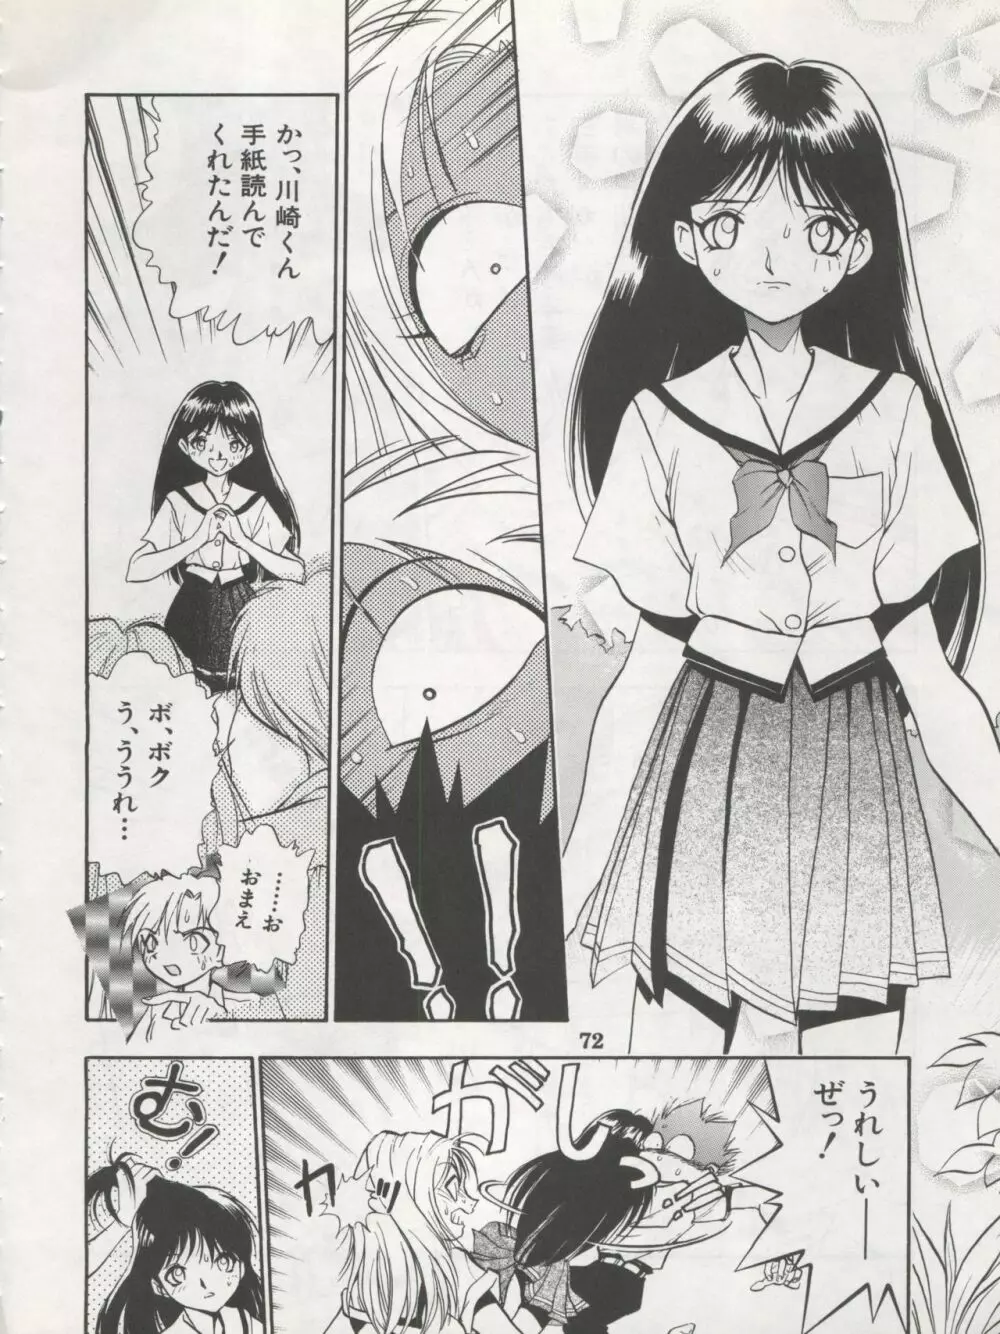 1998 SUMMER 電撃犬王 - page74